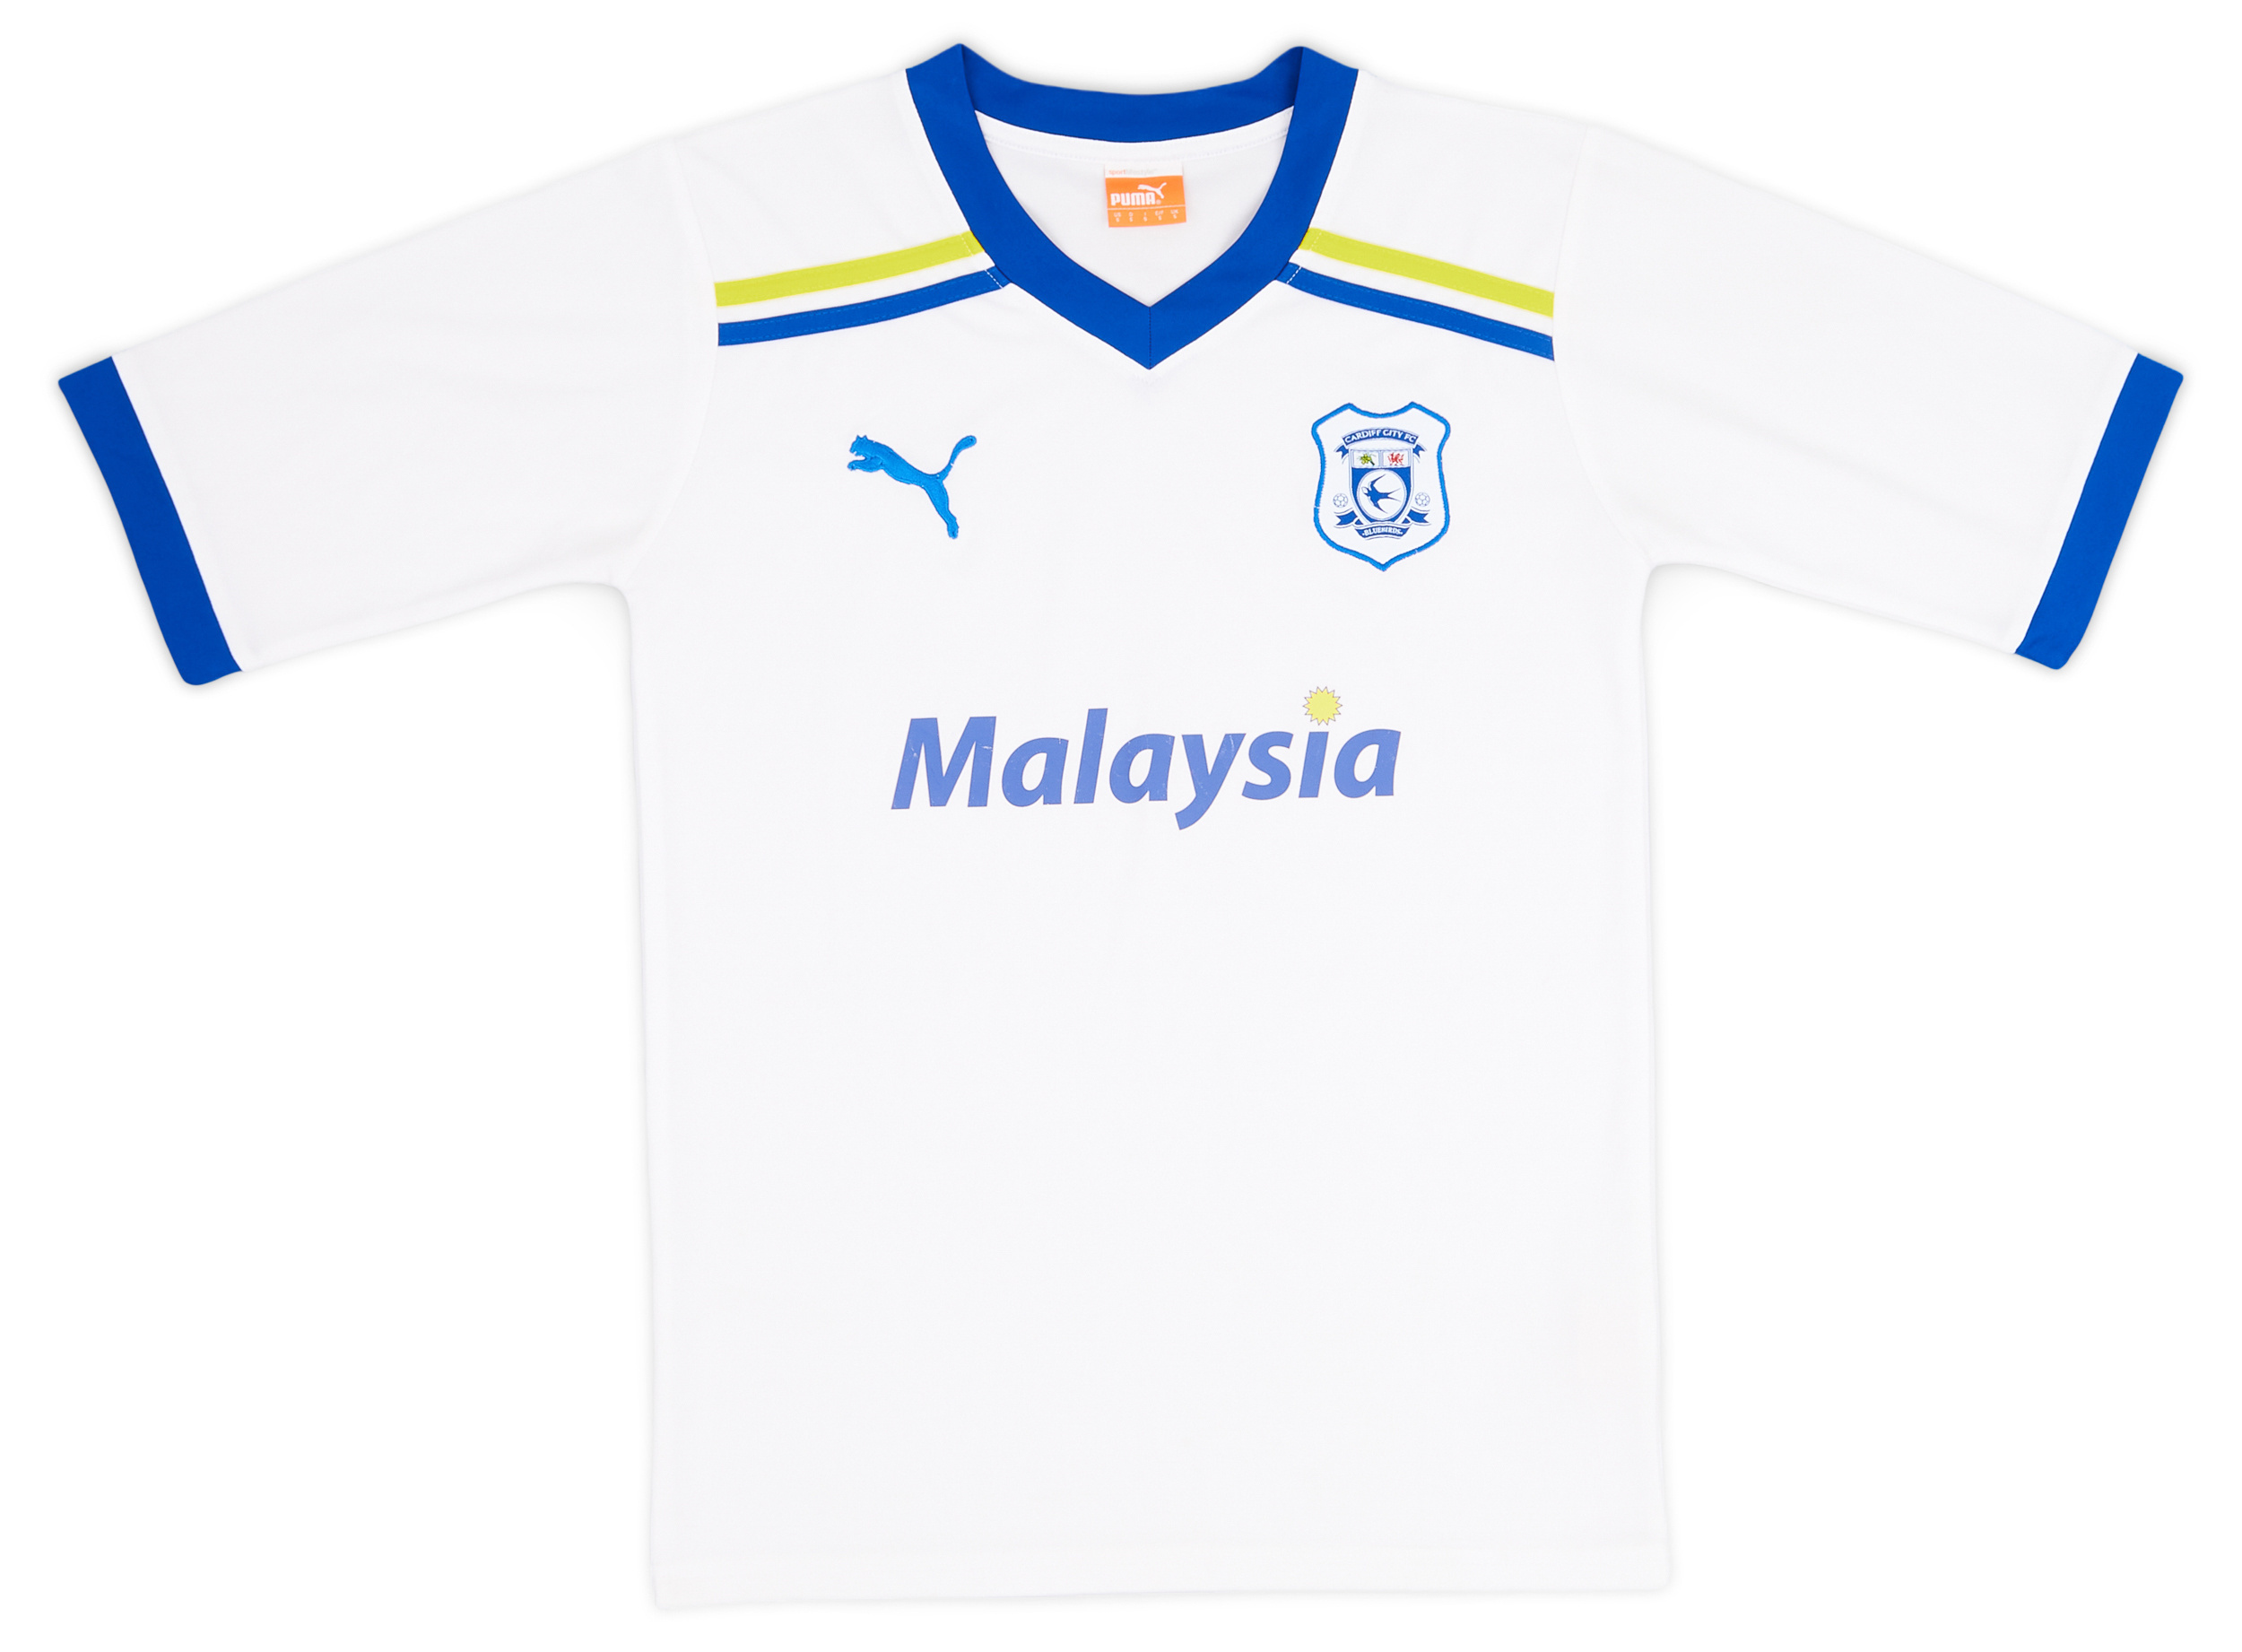 Cardiff City 2021/22 *Sponsor-less* Home Shirt (BNWT) - Multiple